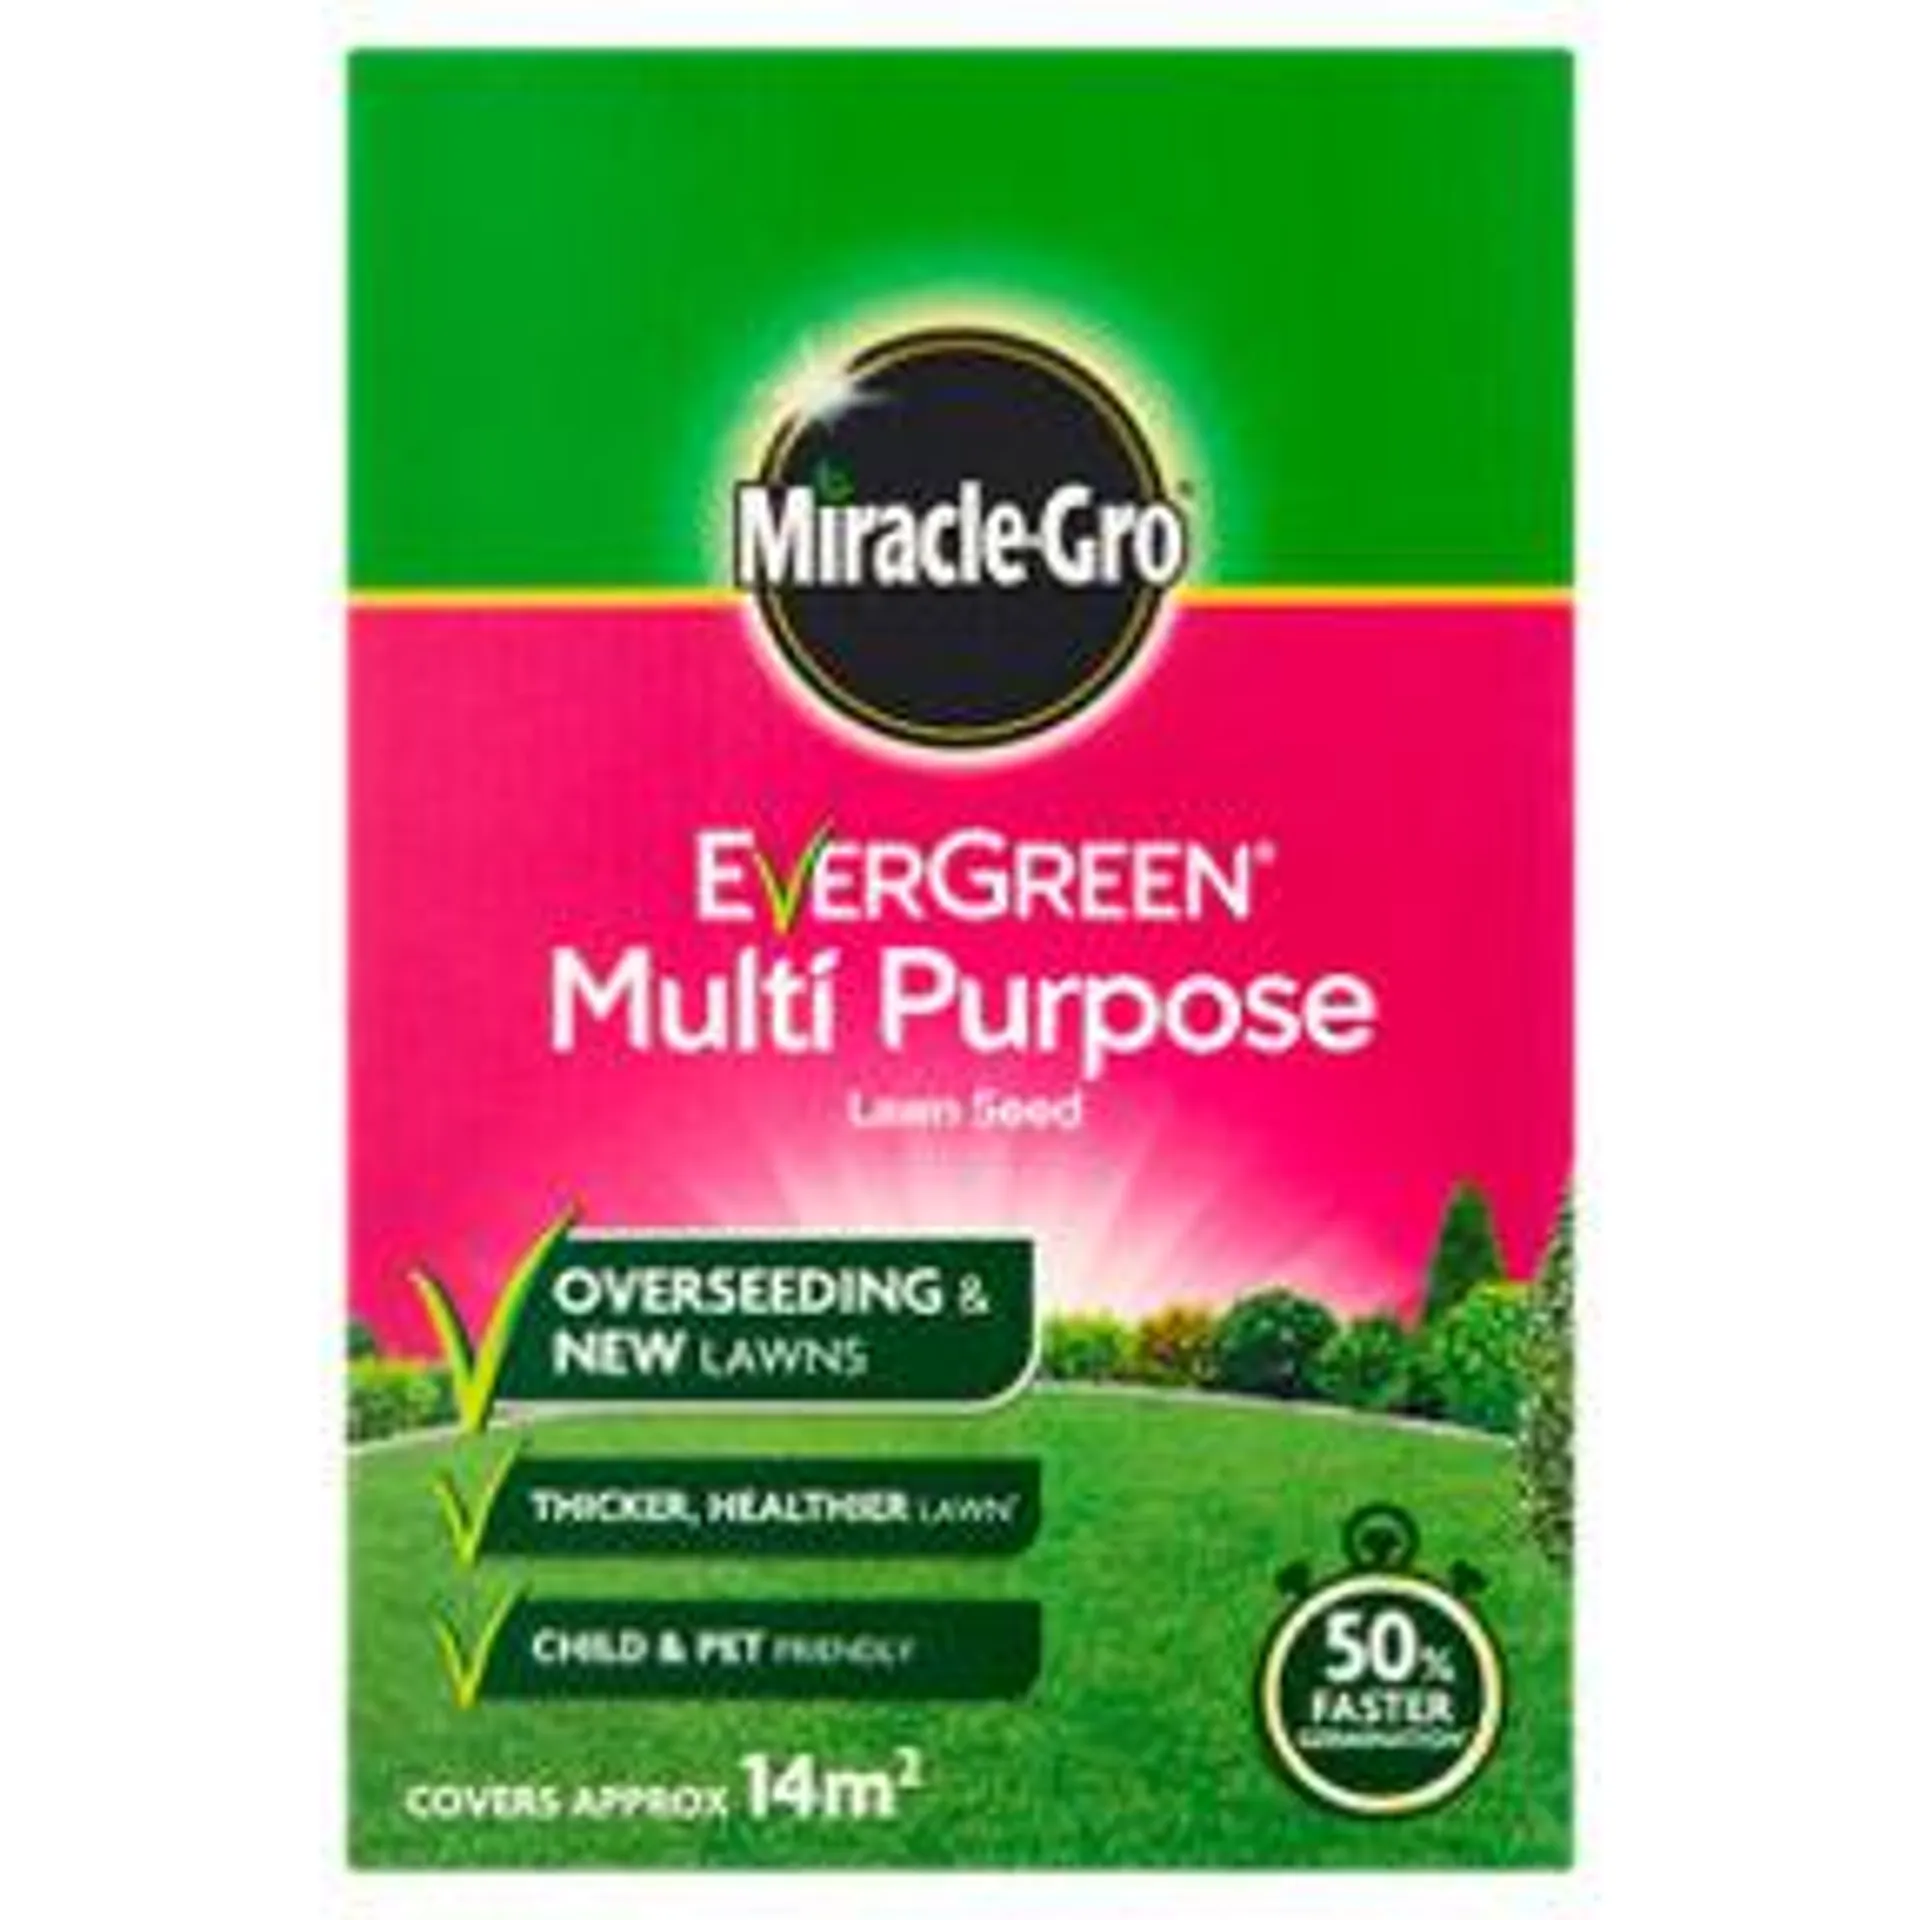 Miracle-Gro Evergreen Multi Purpose Lawn Seed 420g